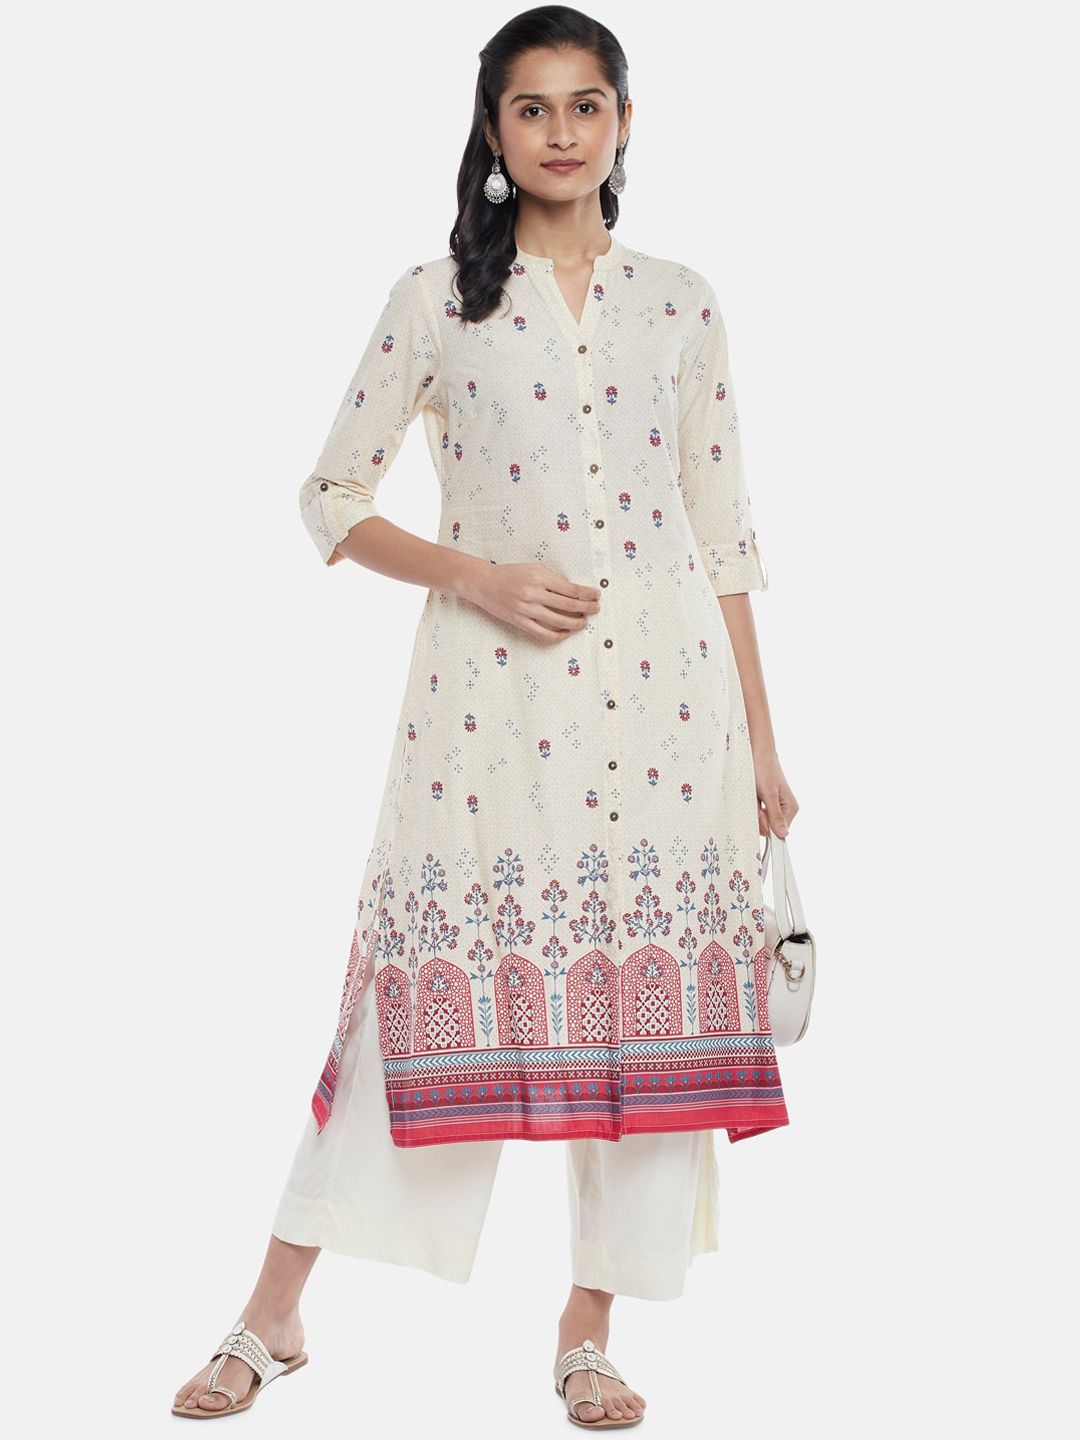 RANGMANCH BY PANTALOONS Women Off White Ethnic Motifs Embroidered Thread Work Anarkali Kurta Price in India